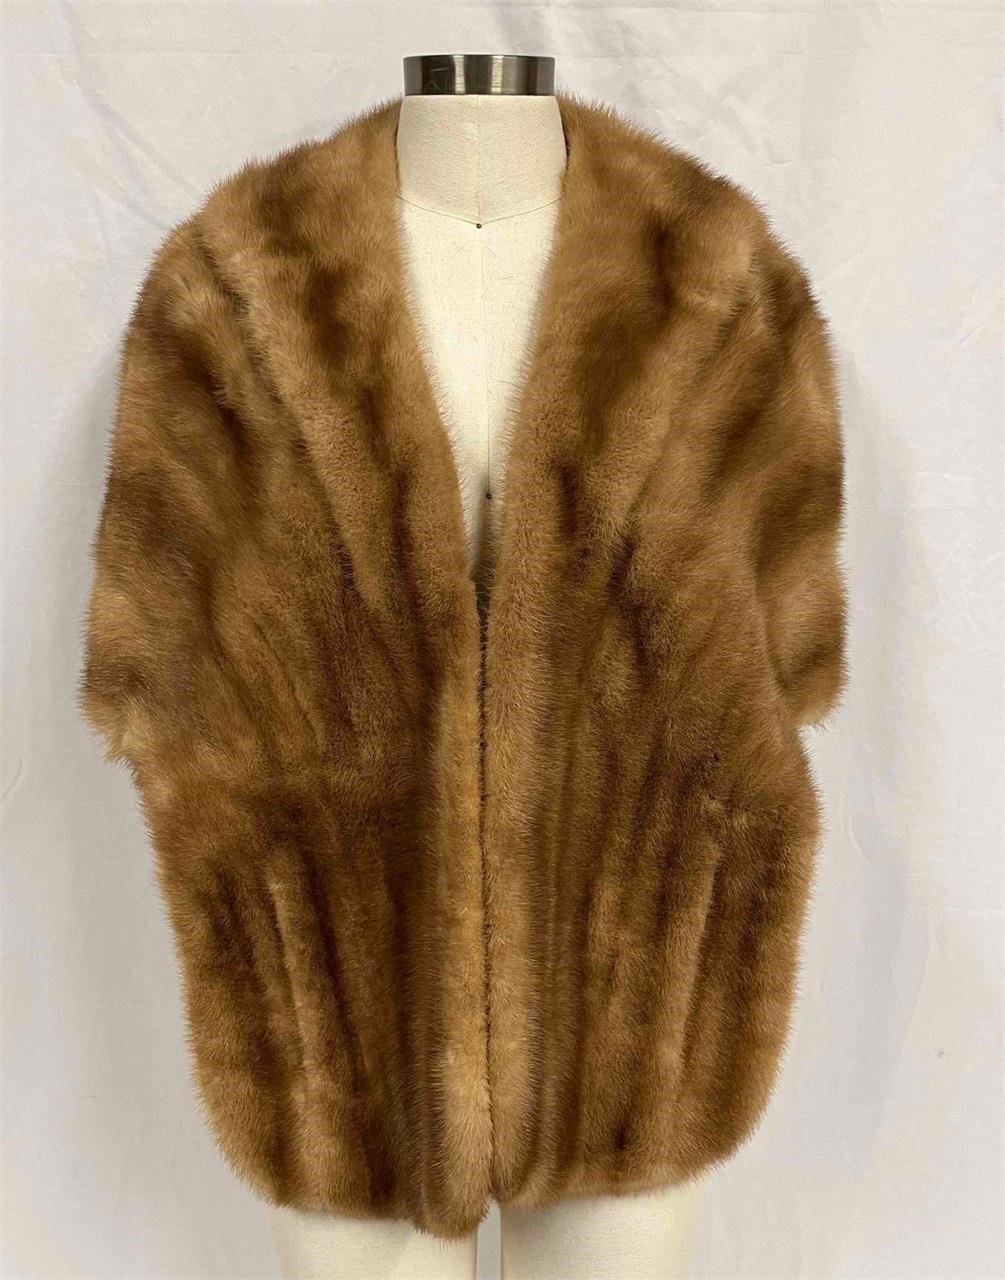 Strutin's Furs Scranton Mink Stole (H19)